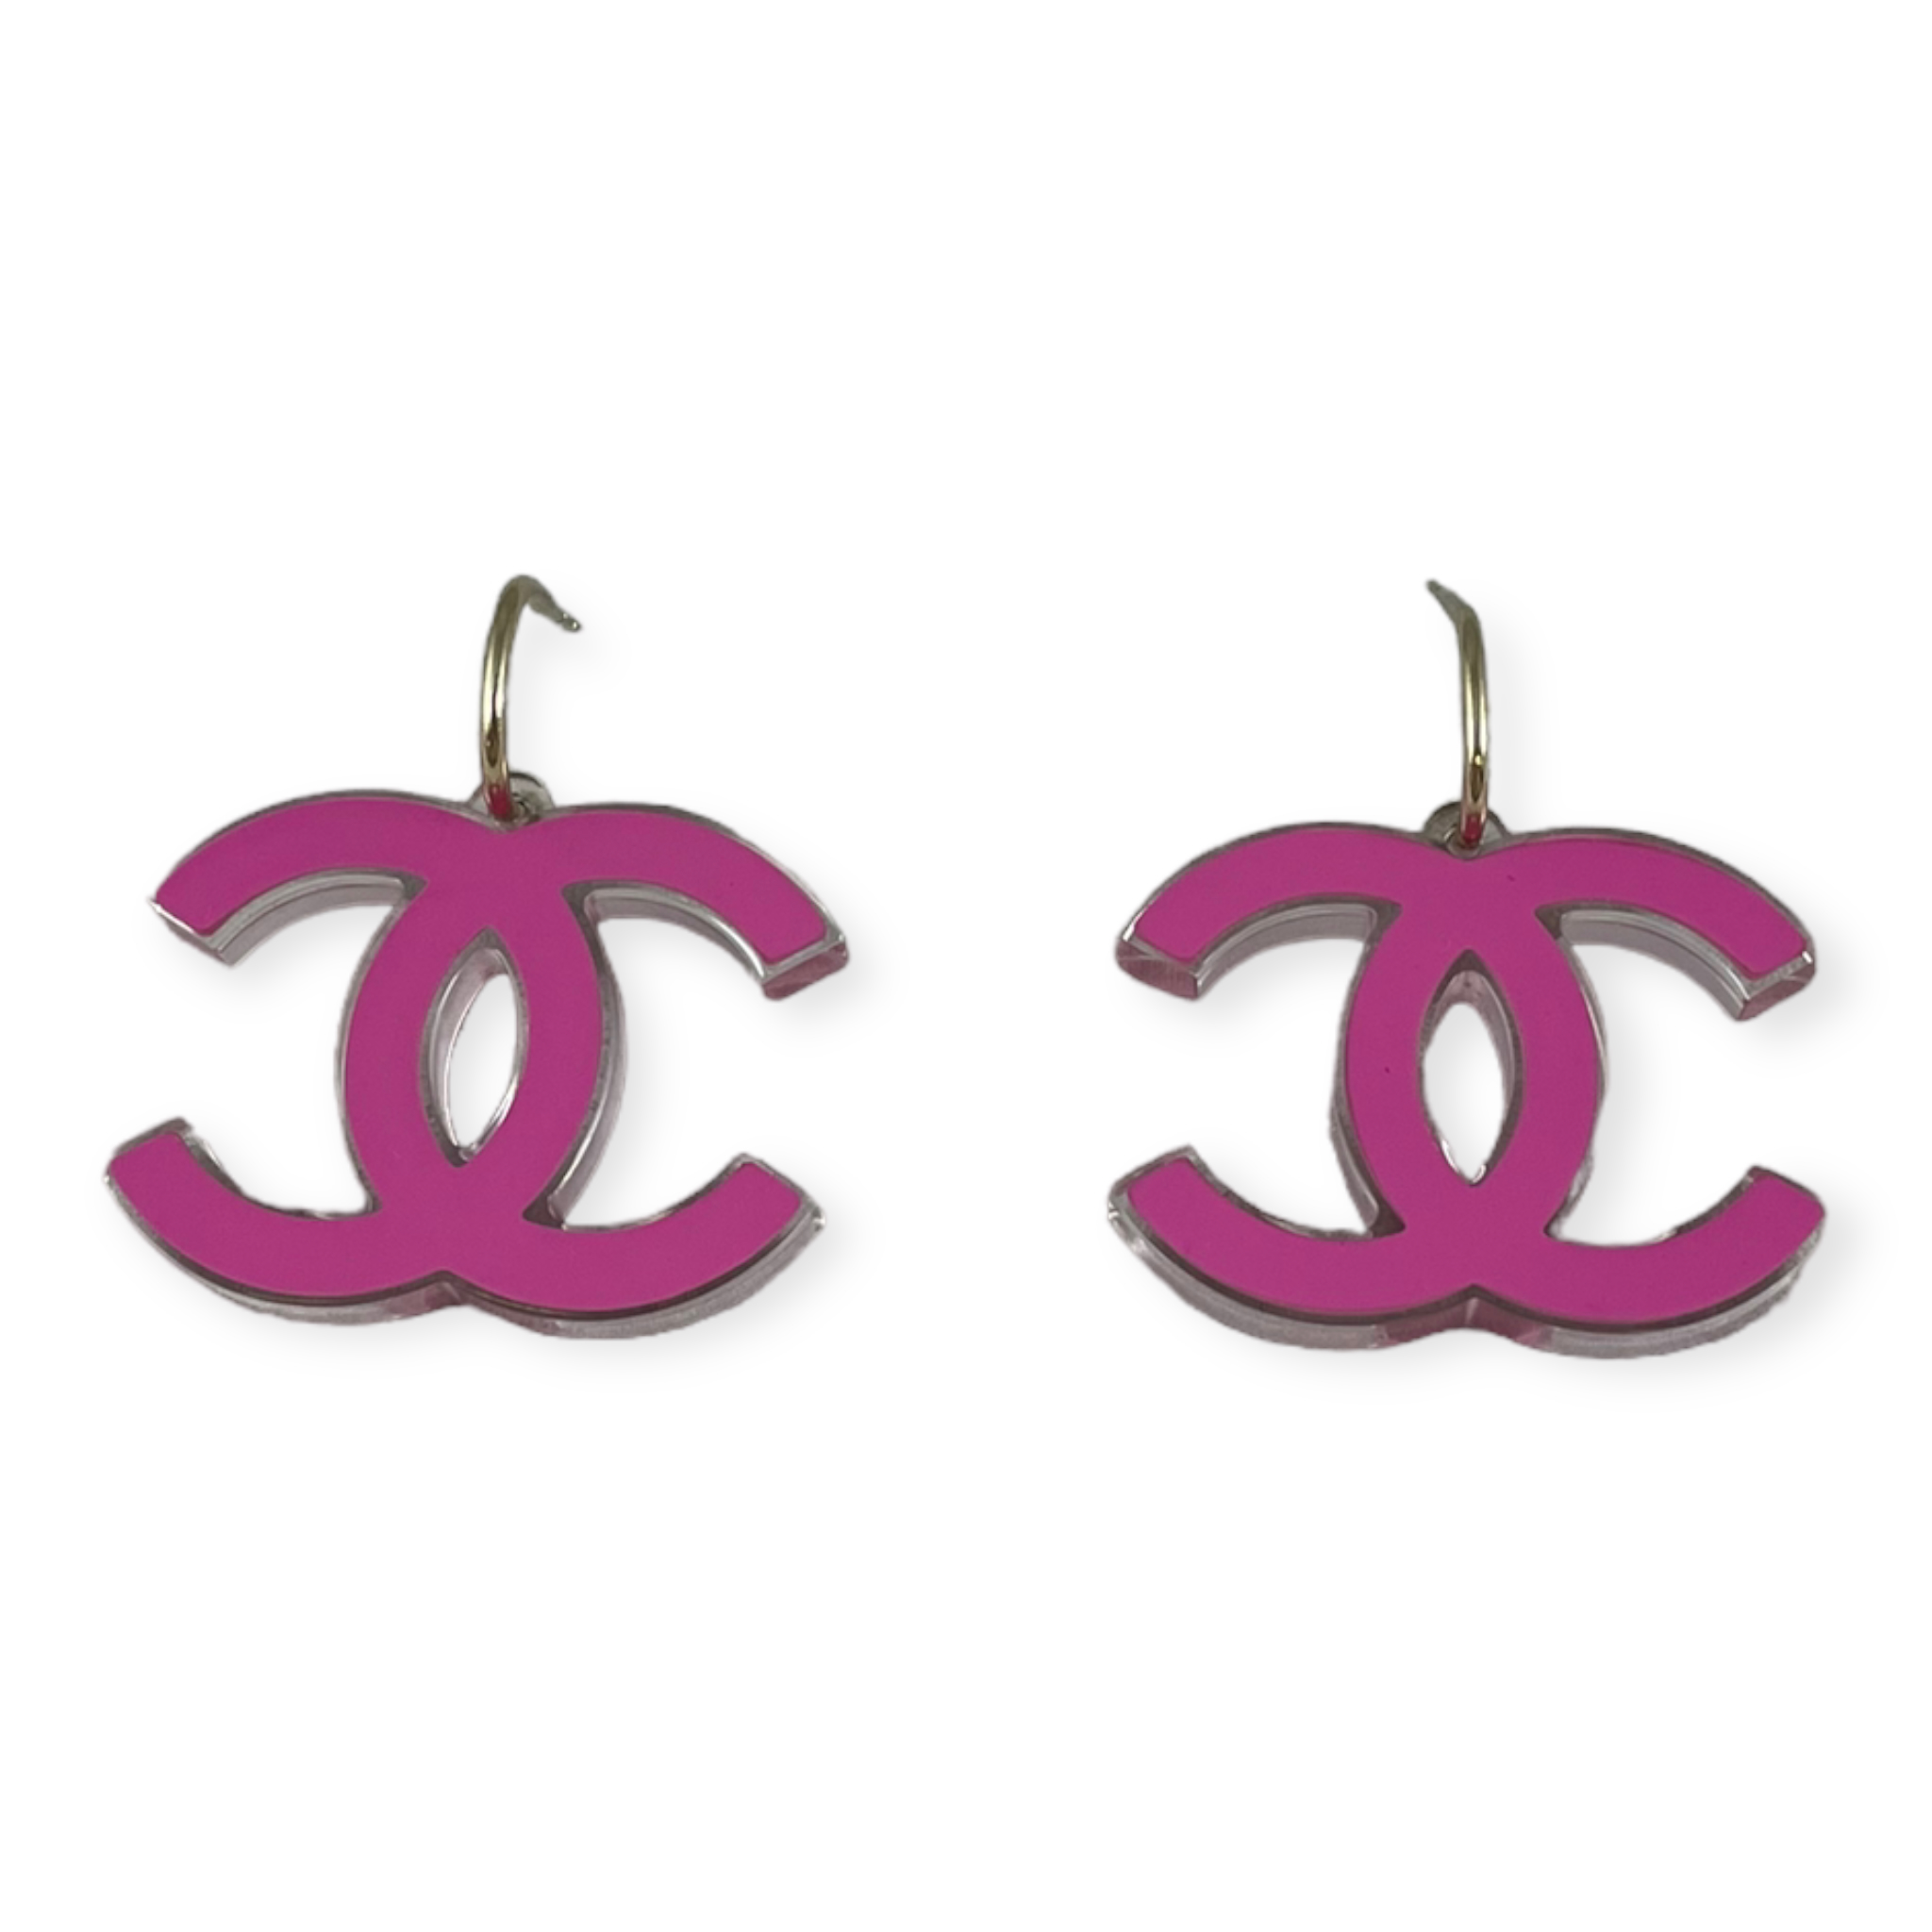 Chanel Coco Mark Women's Earrings GP - 2 Pieces